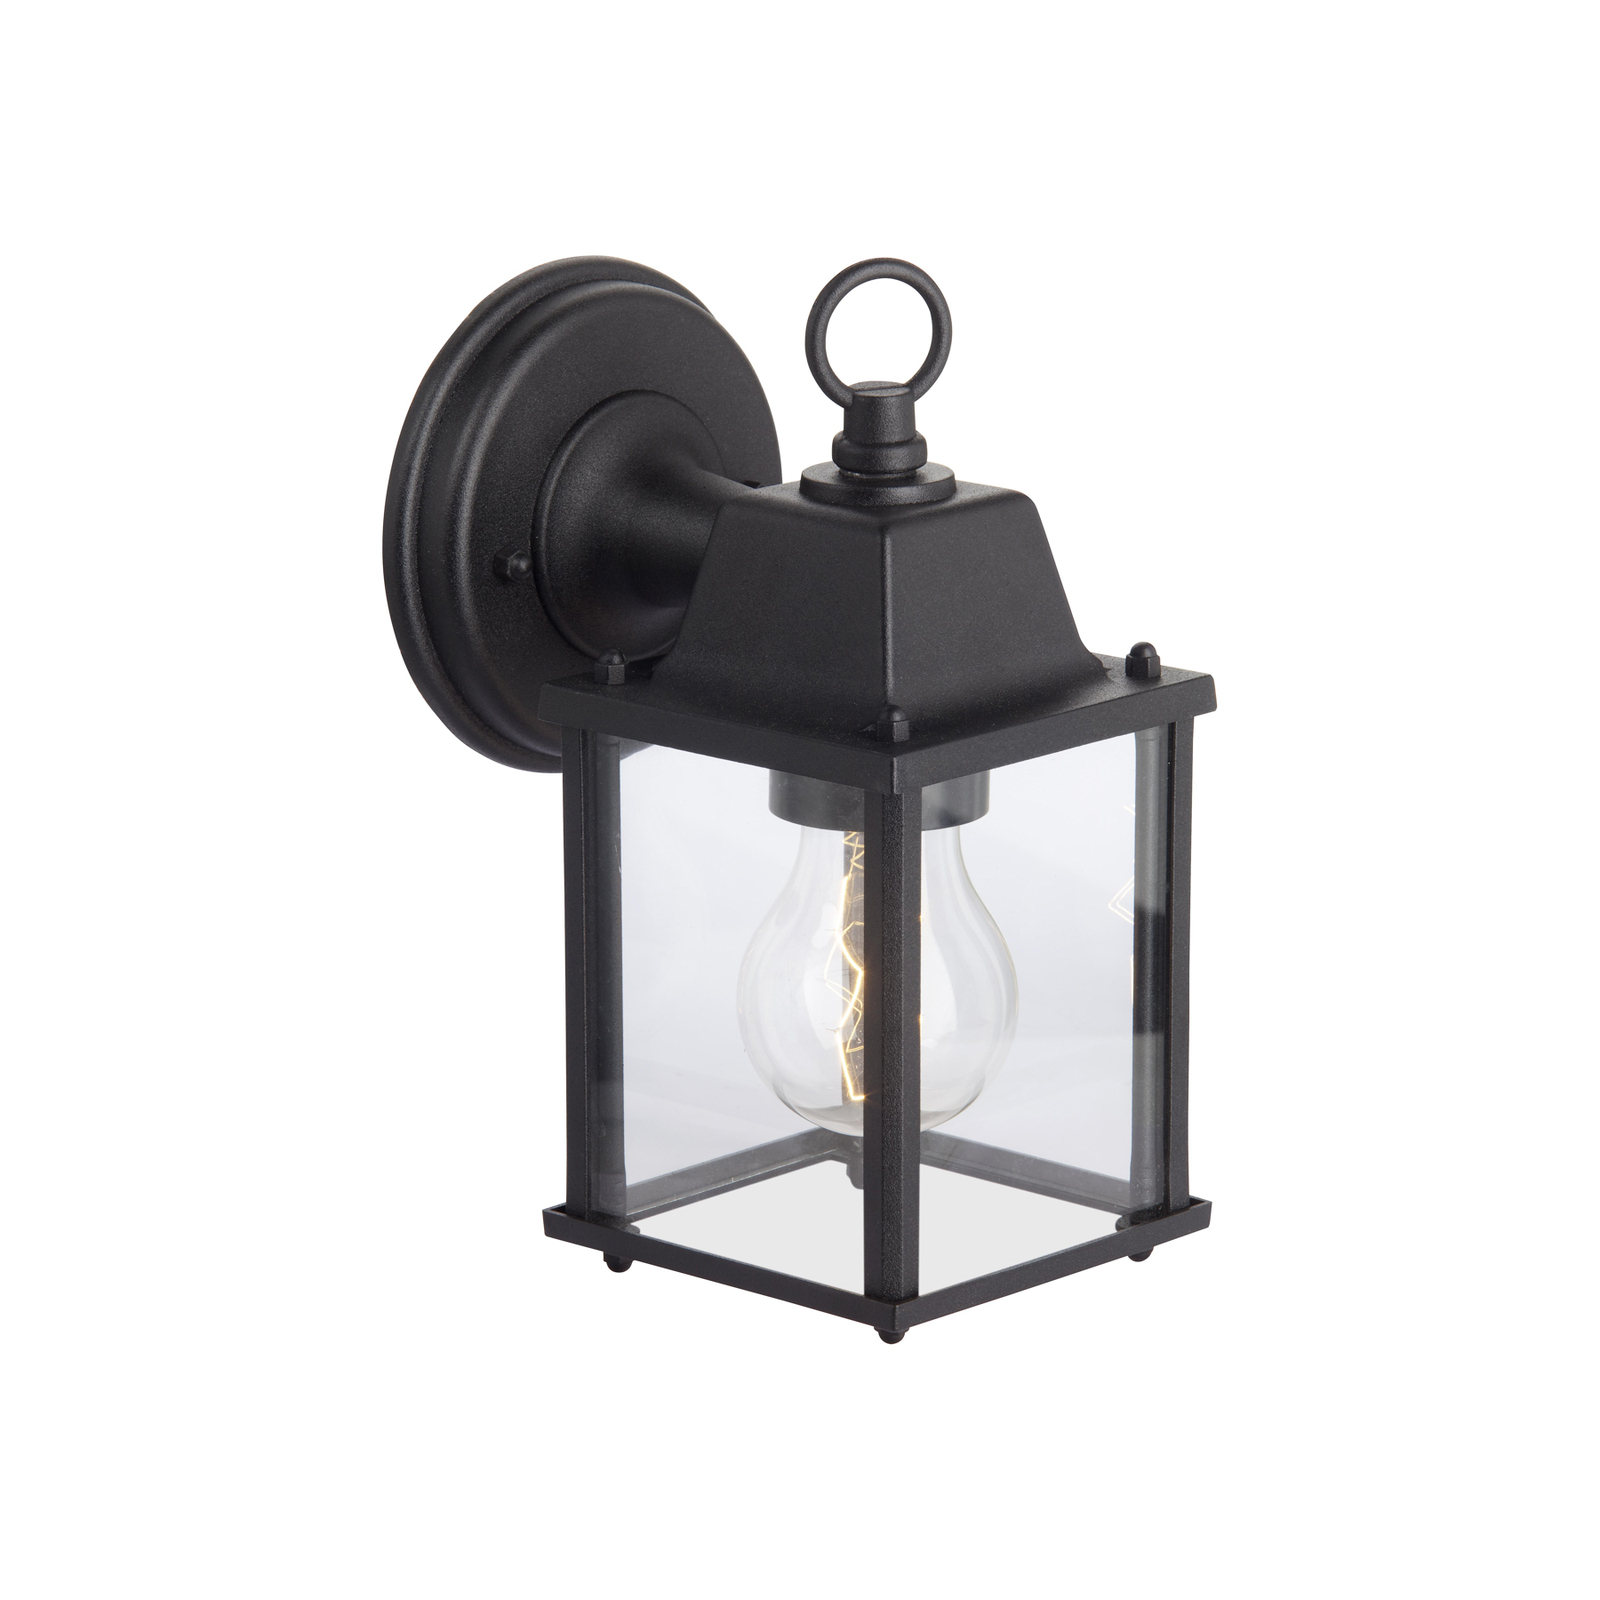 Irvin buitenwandlamp, hoogte 22 cm, zwart, metaal/glas